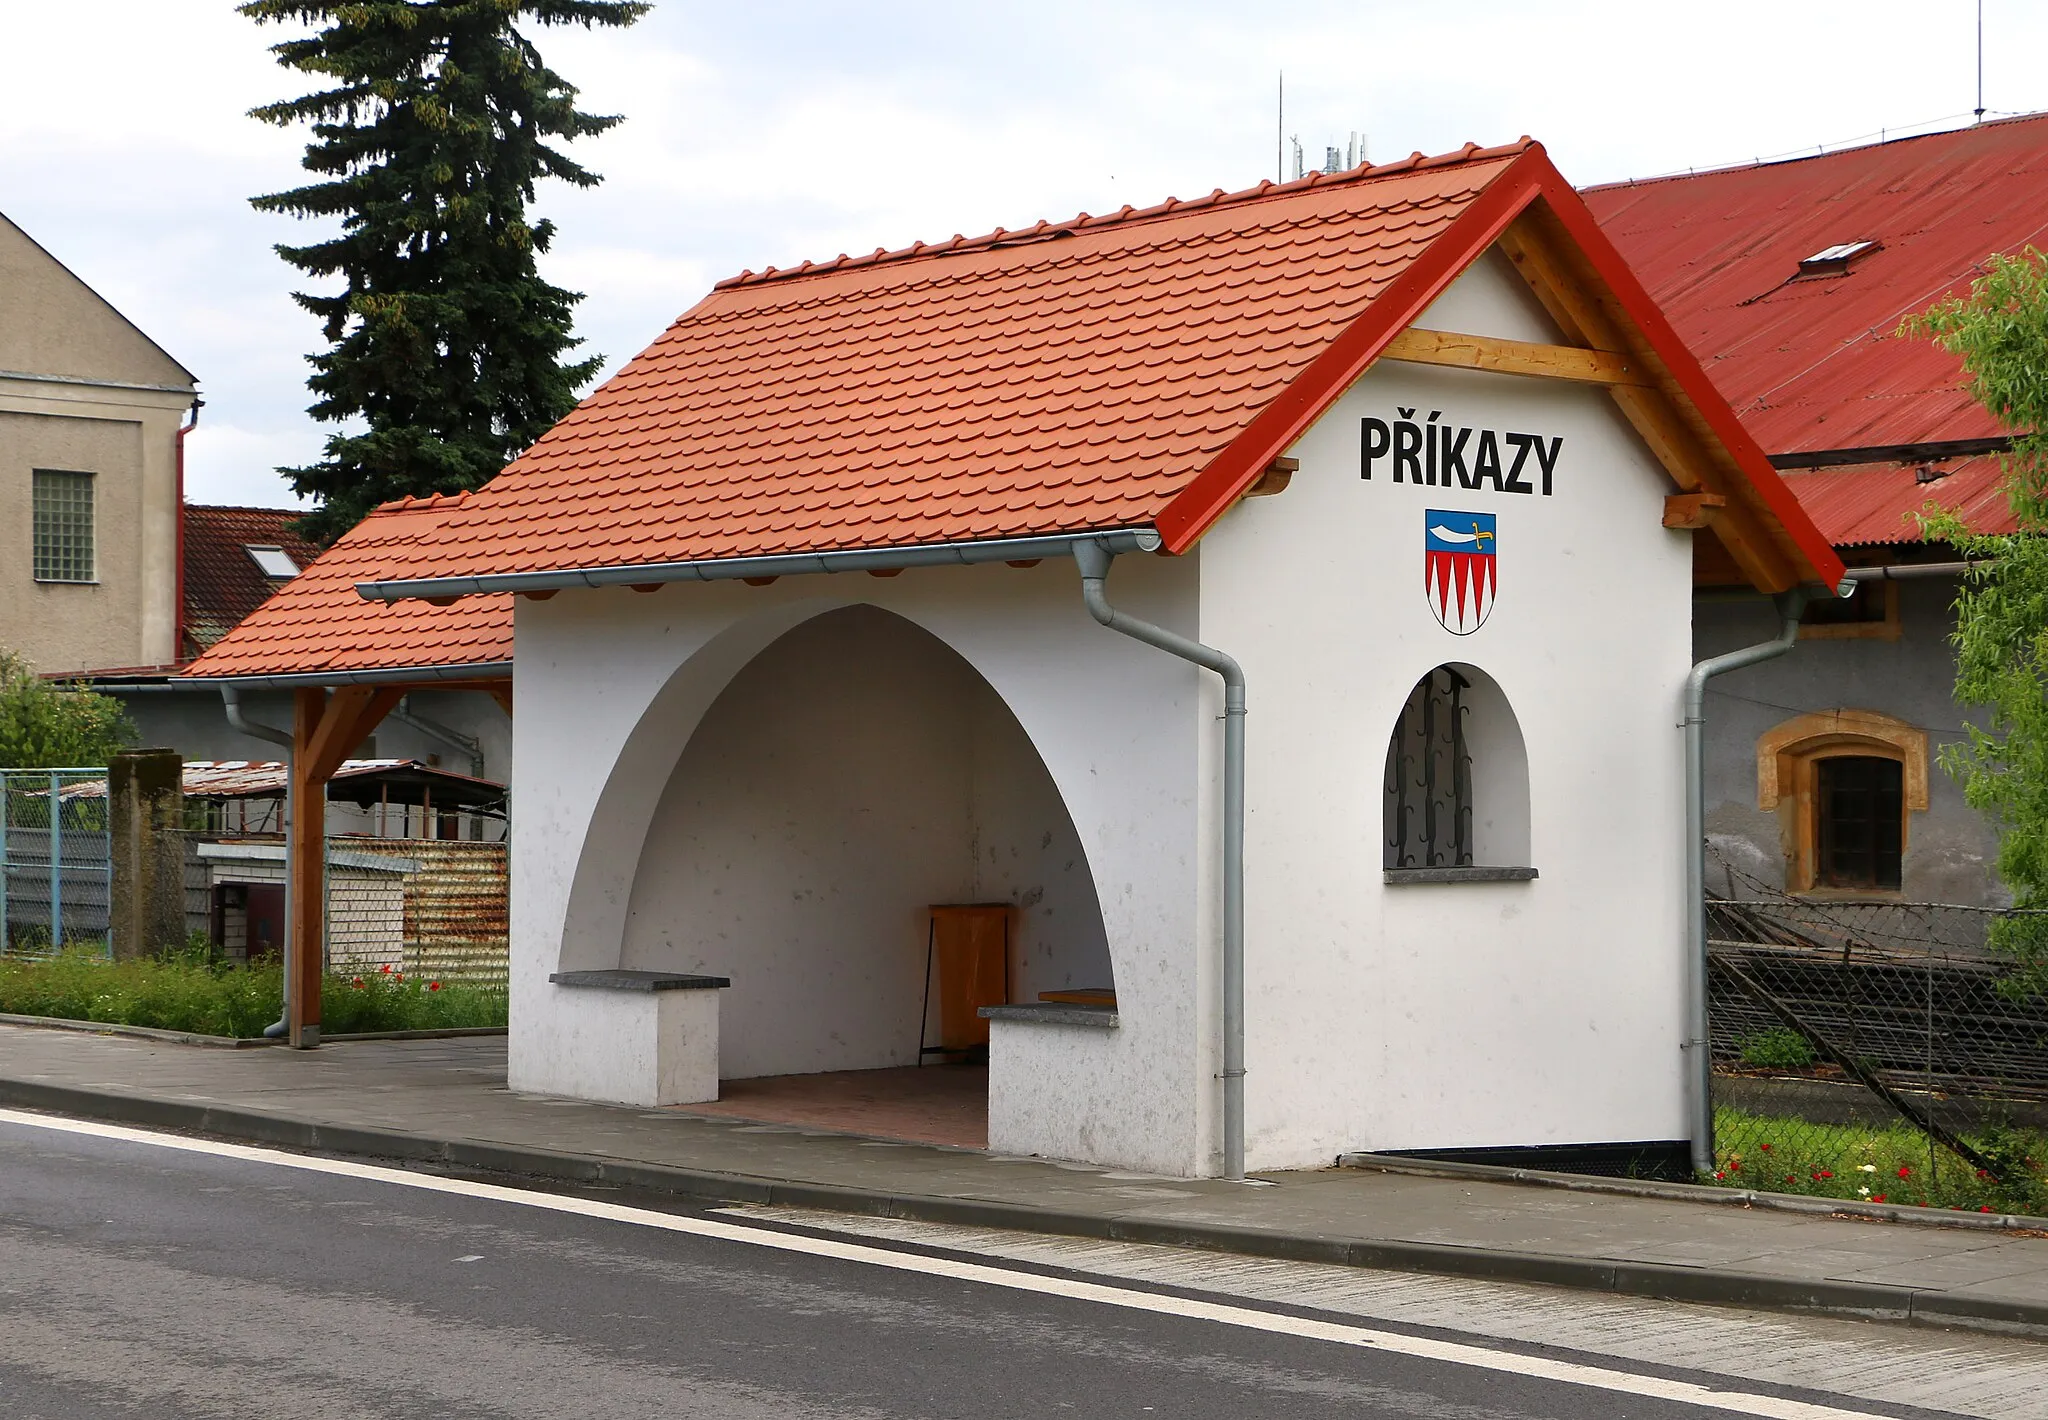 Photo showing: New bus stop in Příkazy village, Czech Republic.